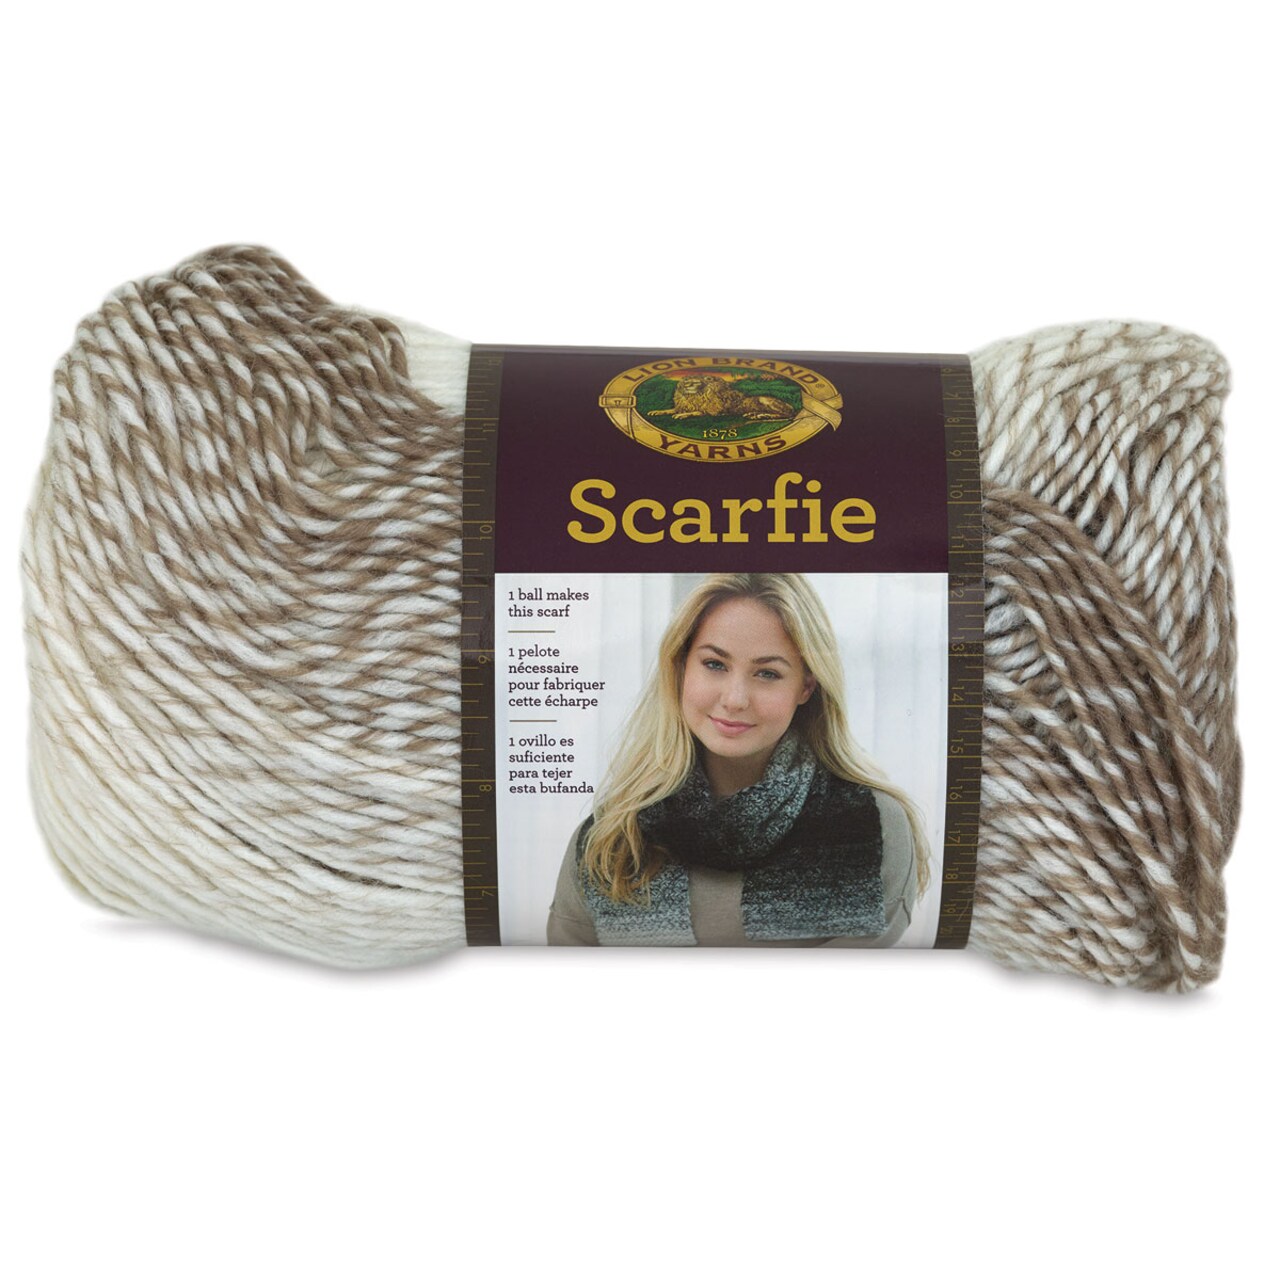 Lion Brand Scarfie Yarn - Cream/Taupe, 312 yds